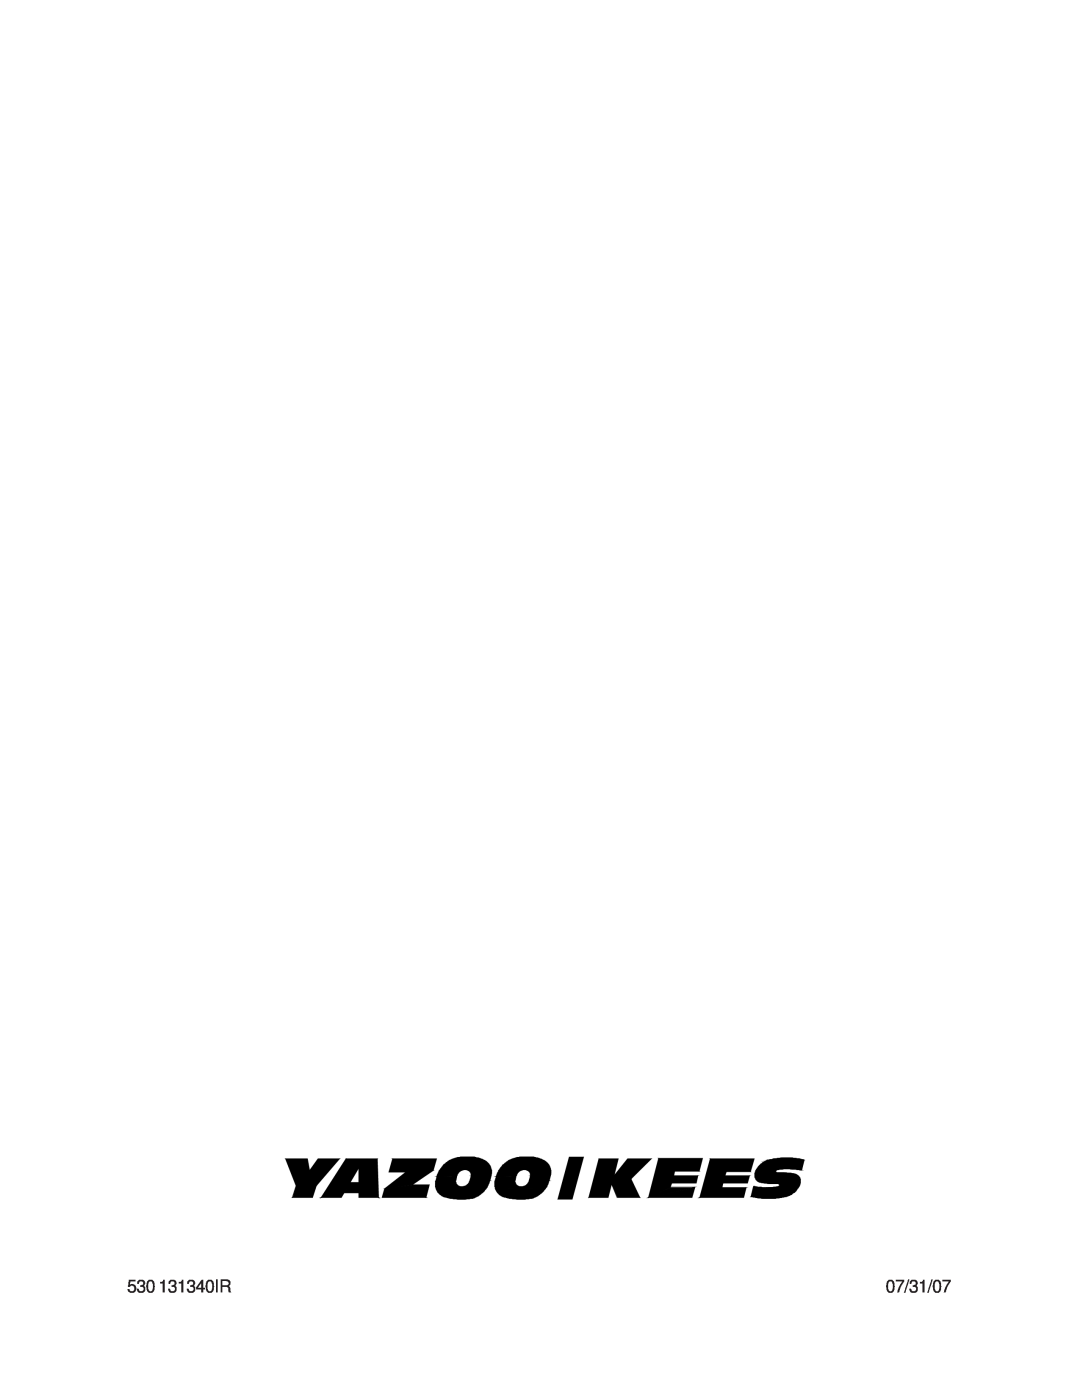 Yazoo/Kees ZEKH42200, ZEKH48240, ZEKH52240 manual 530 131340IR, 07/31/07 